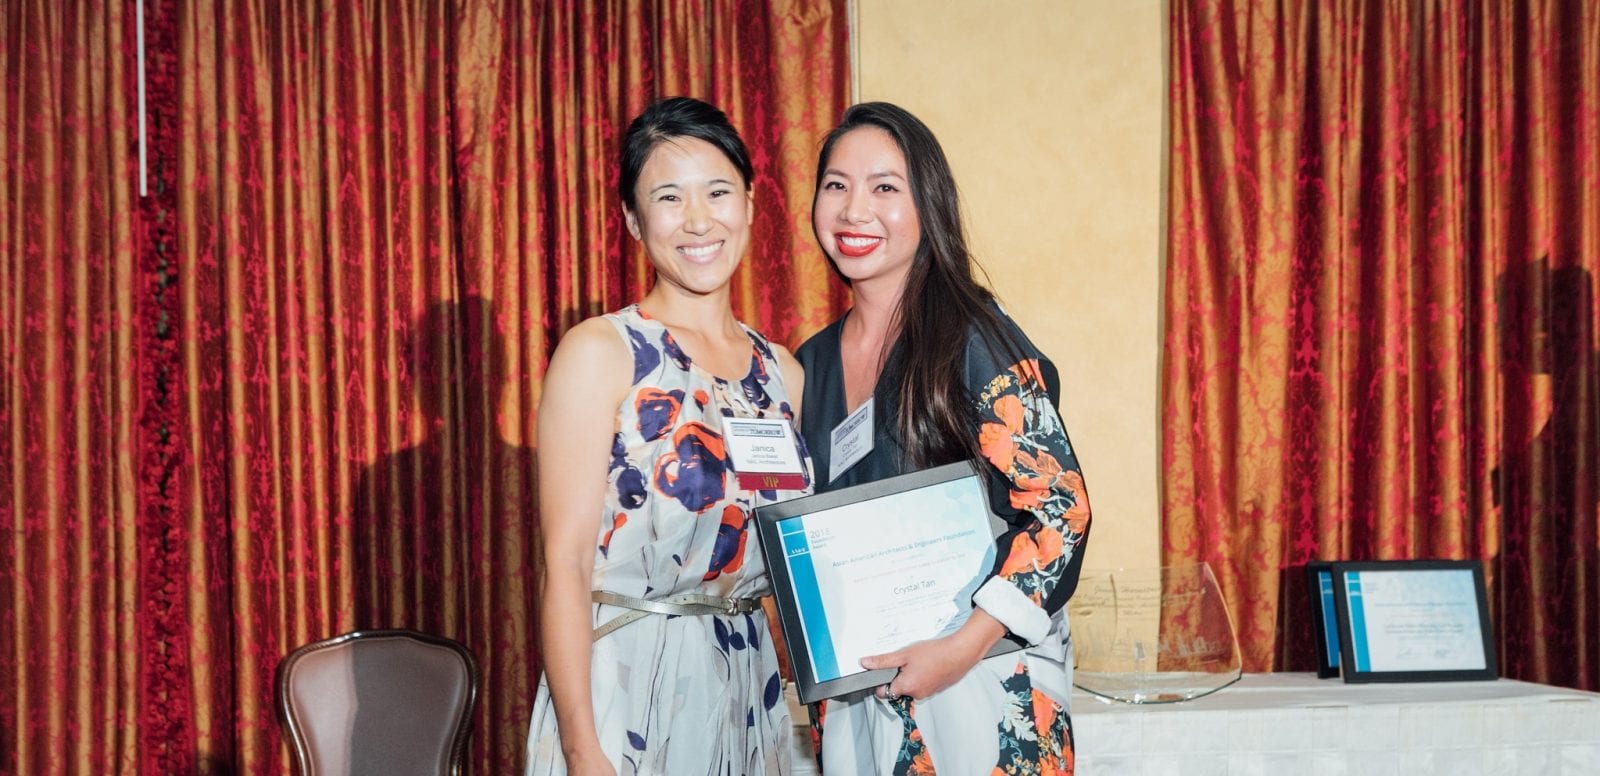 MArch Alumna Crystal Tan Awarded 2018 AAa/e Scholarship